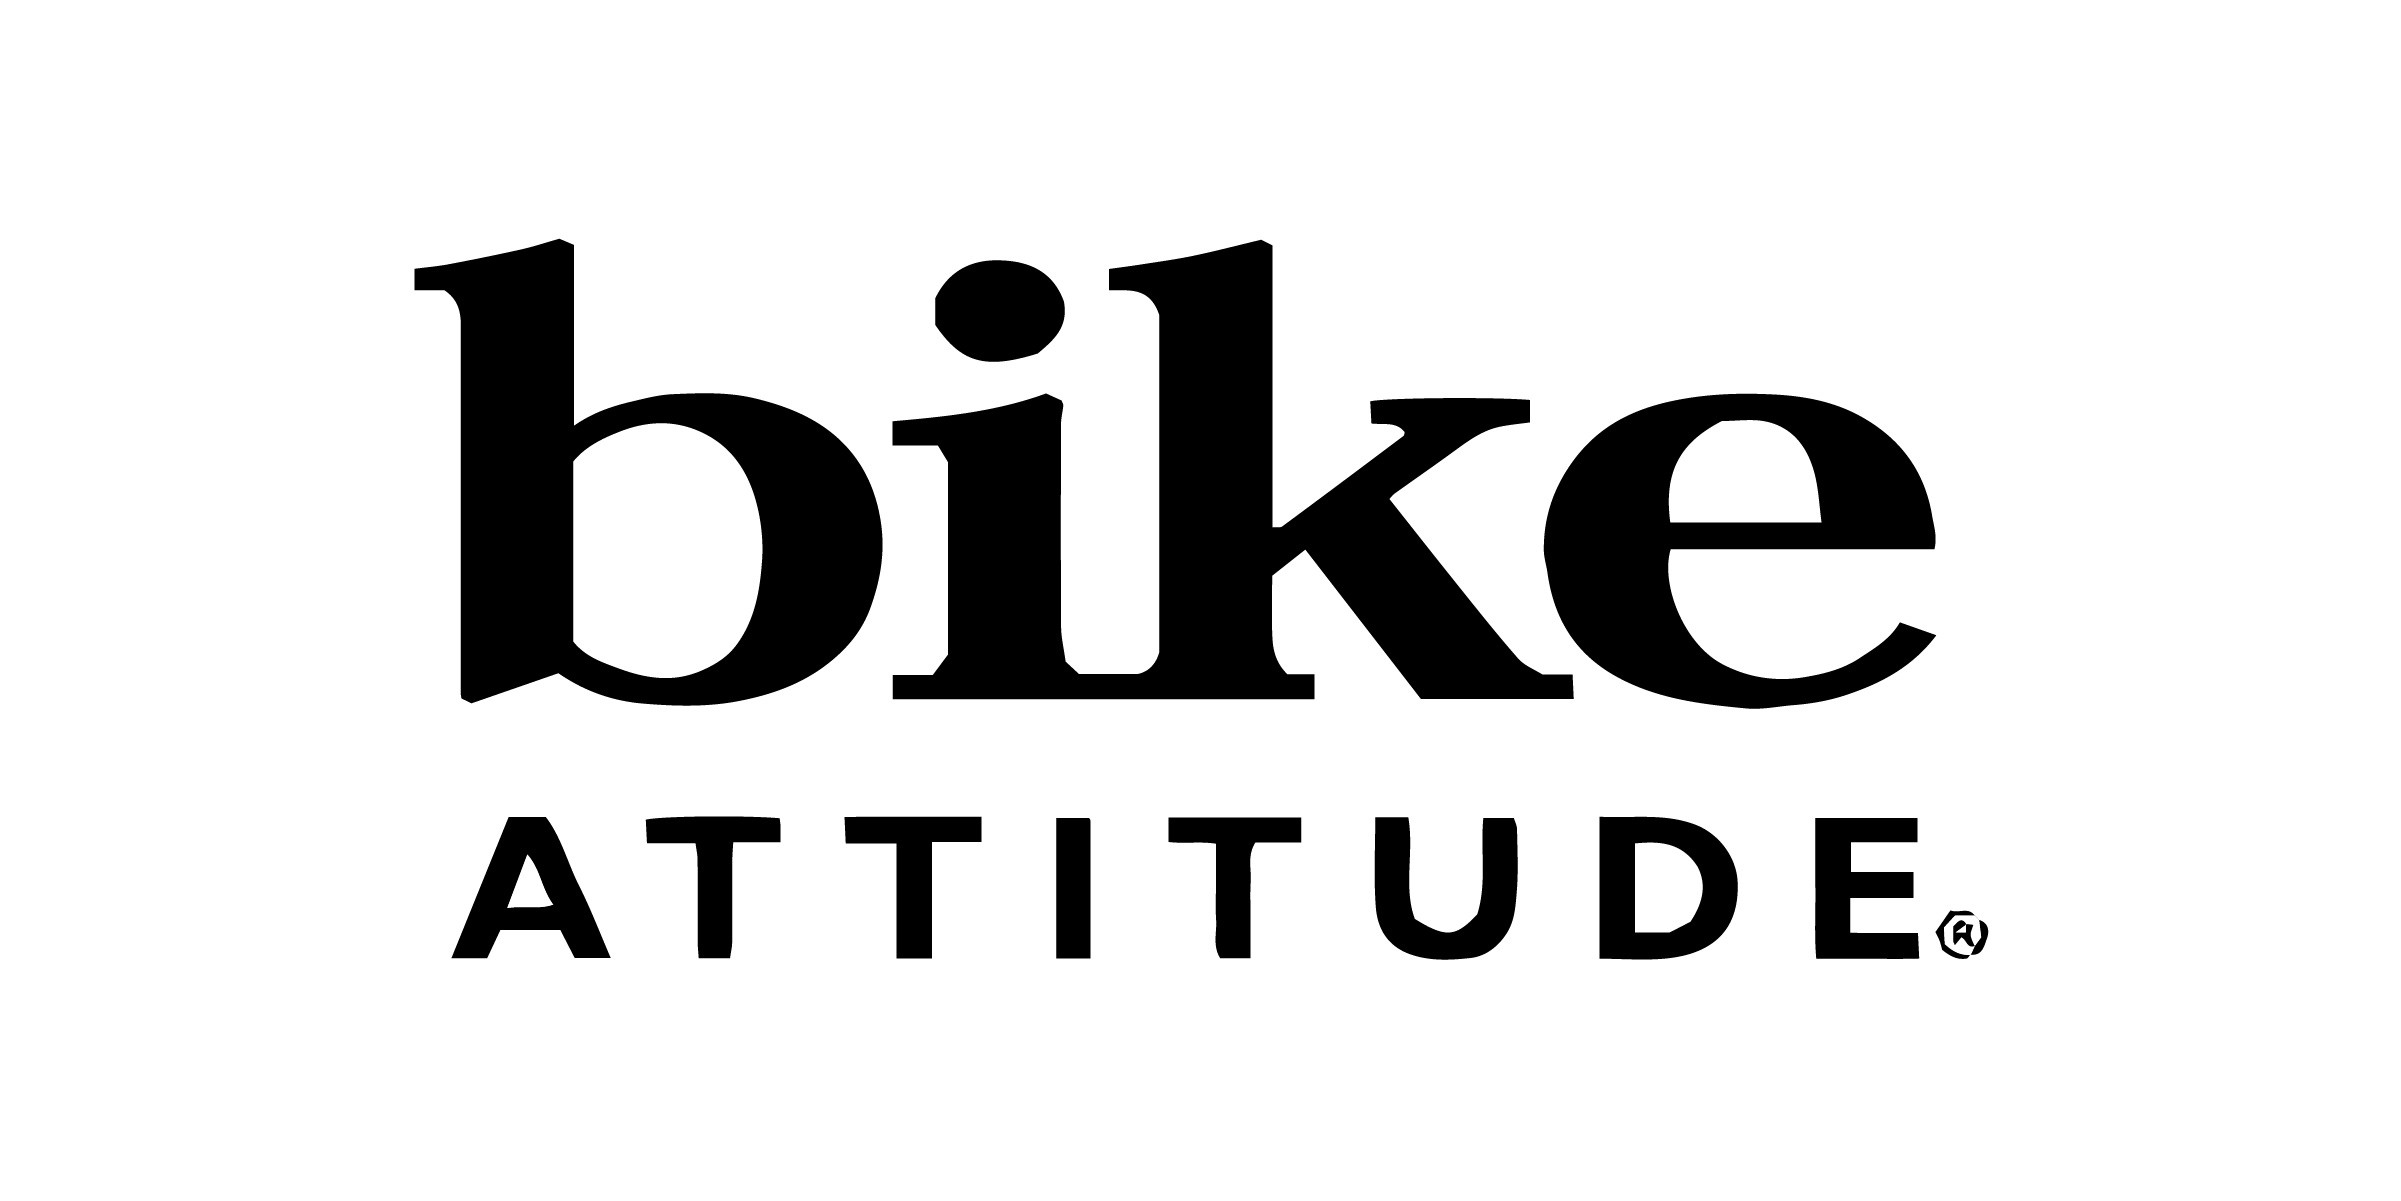 Bike Attitude